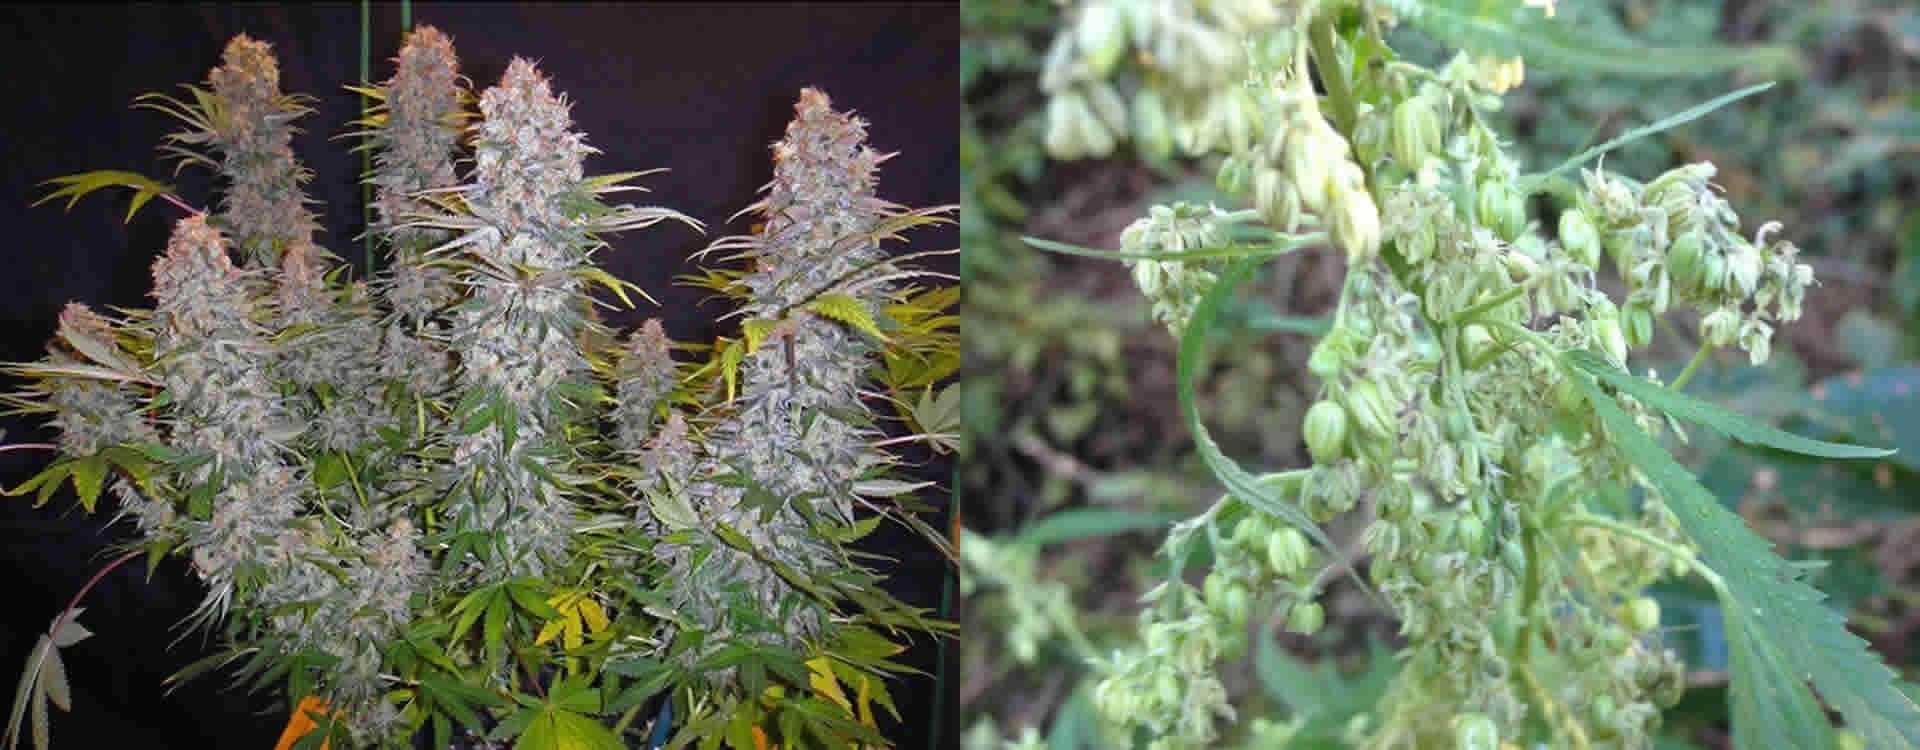 Male vs female cannabis plants